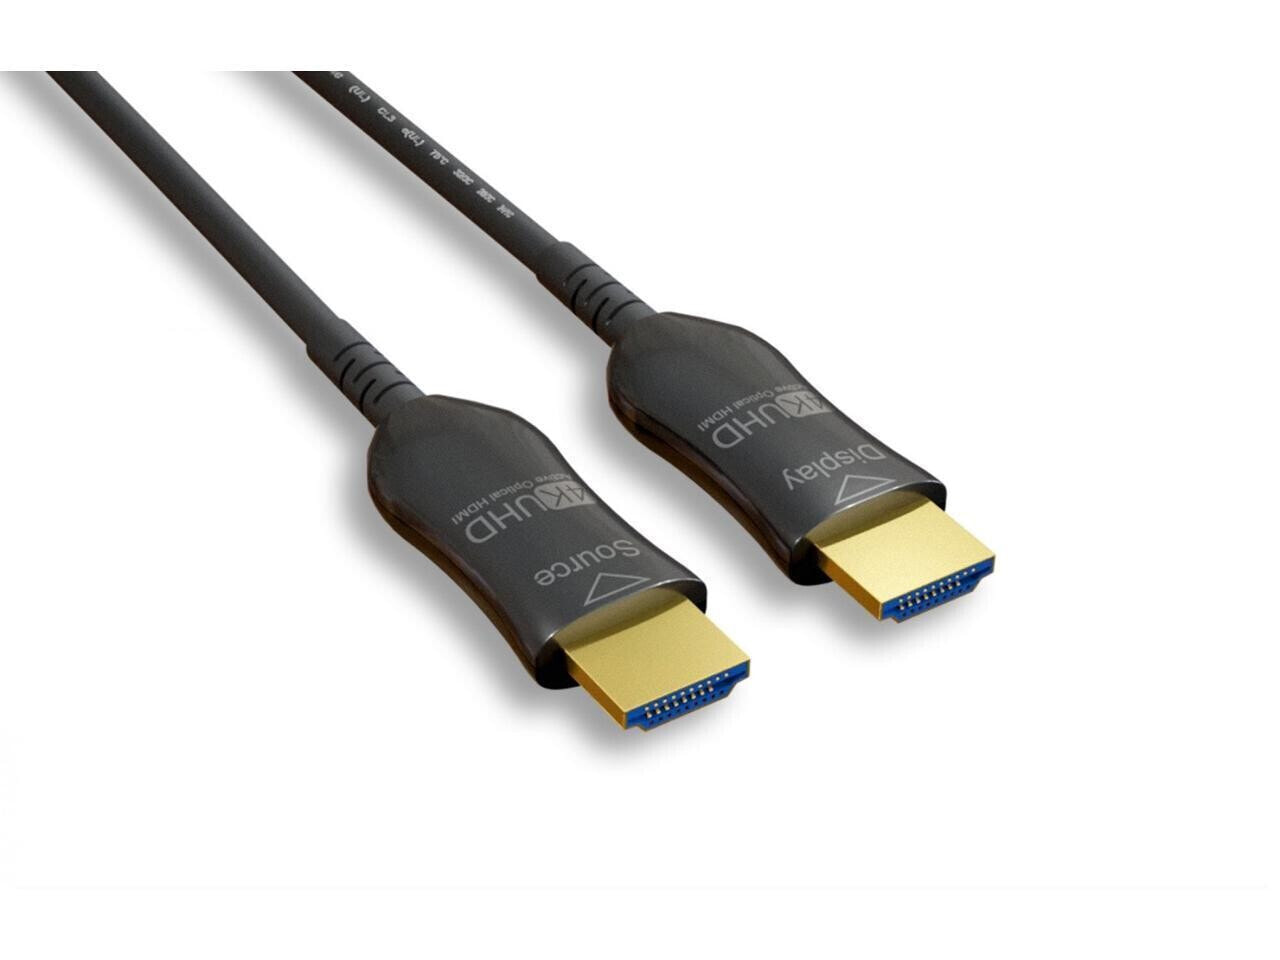 Nippon Labs 35ft. 4K Hybrid Active Optical Fiber CL3 HDMI Cable, 4K@ 60Hz, UHD H